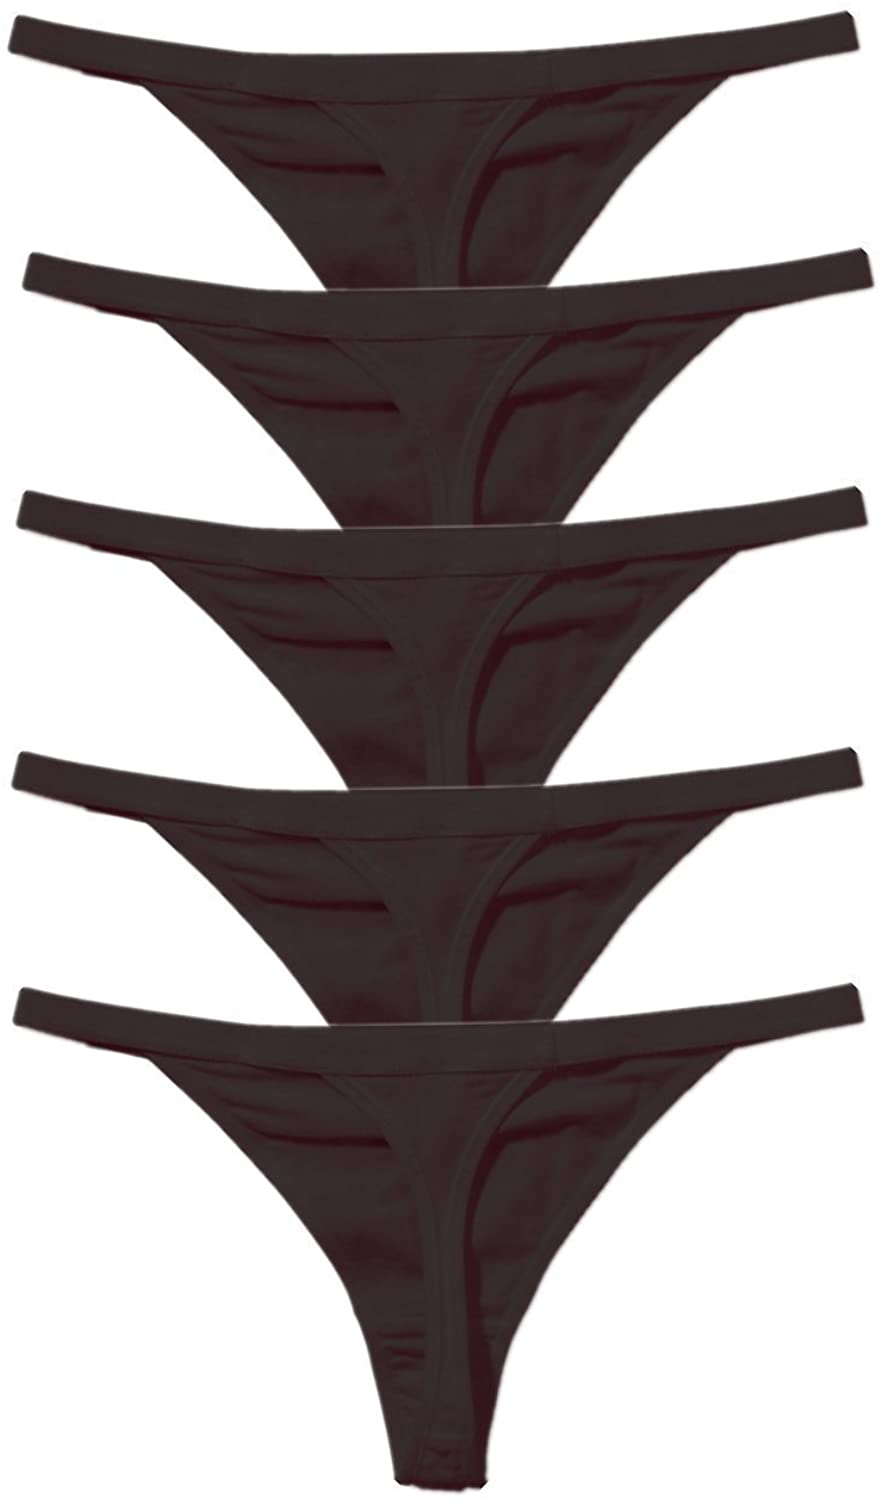 Closecret Women's Sexy Panties Cotton Thongs Pack of 5pcs G